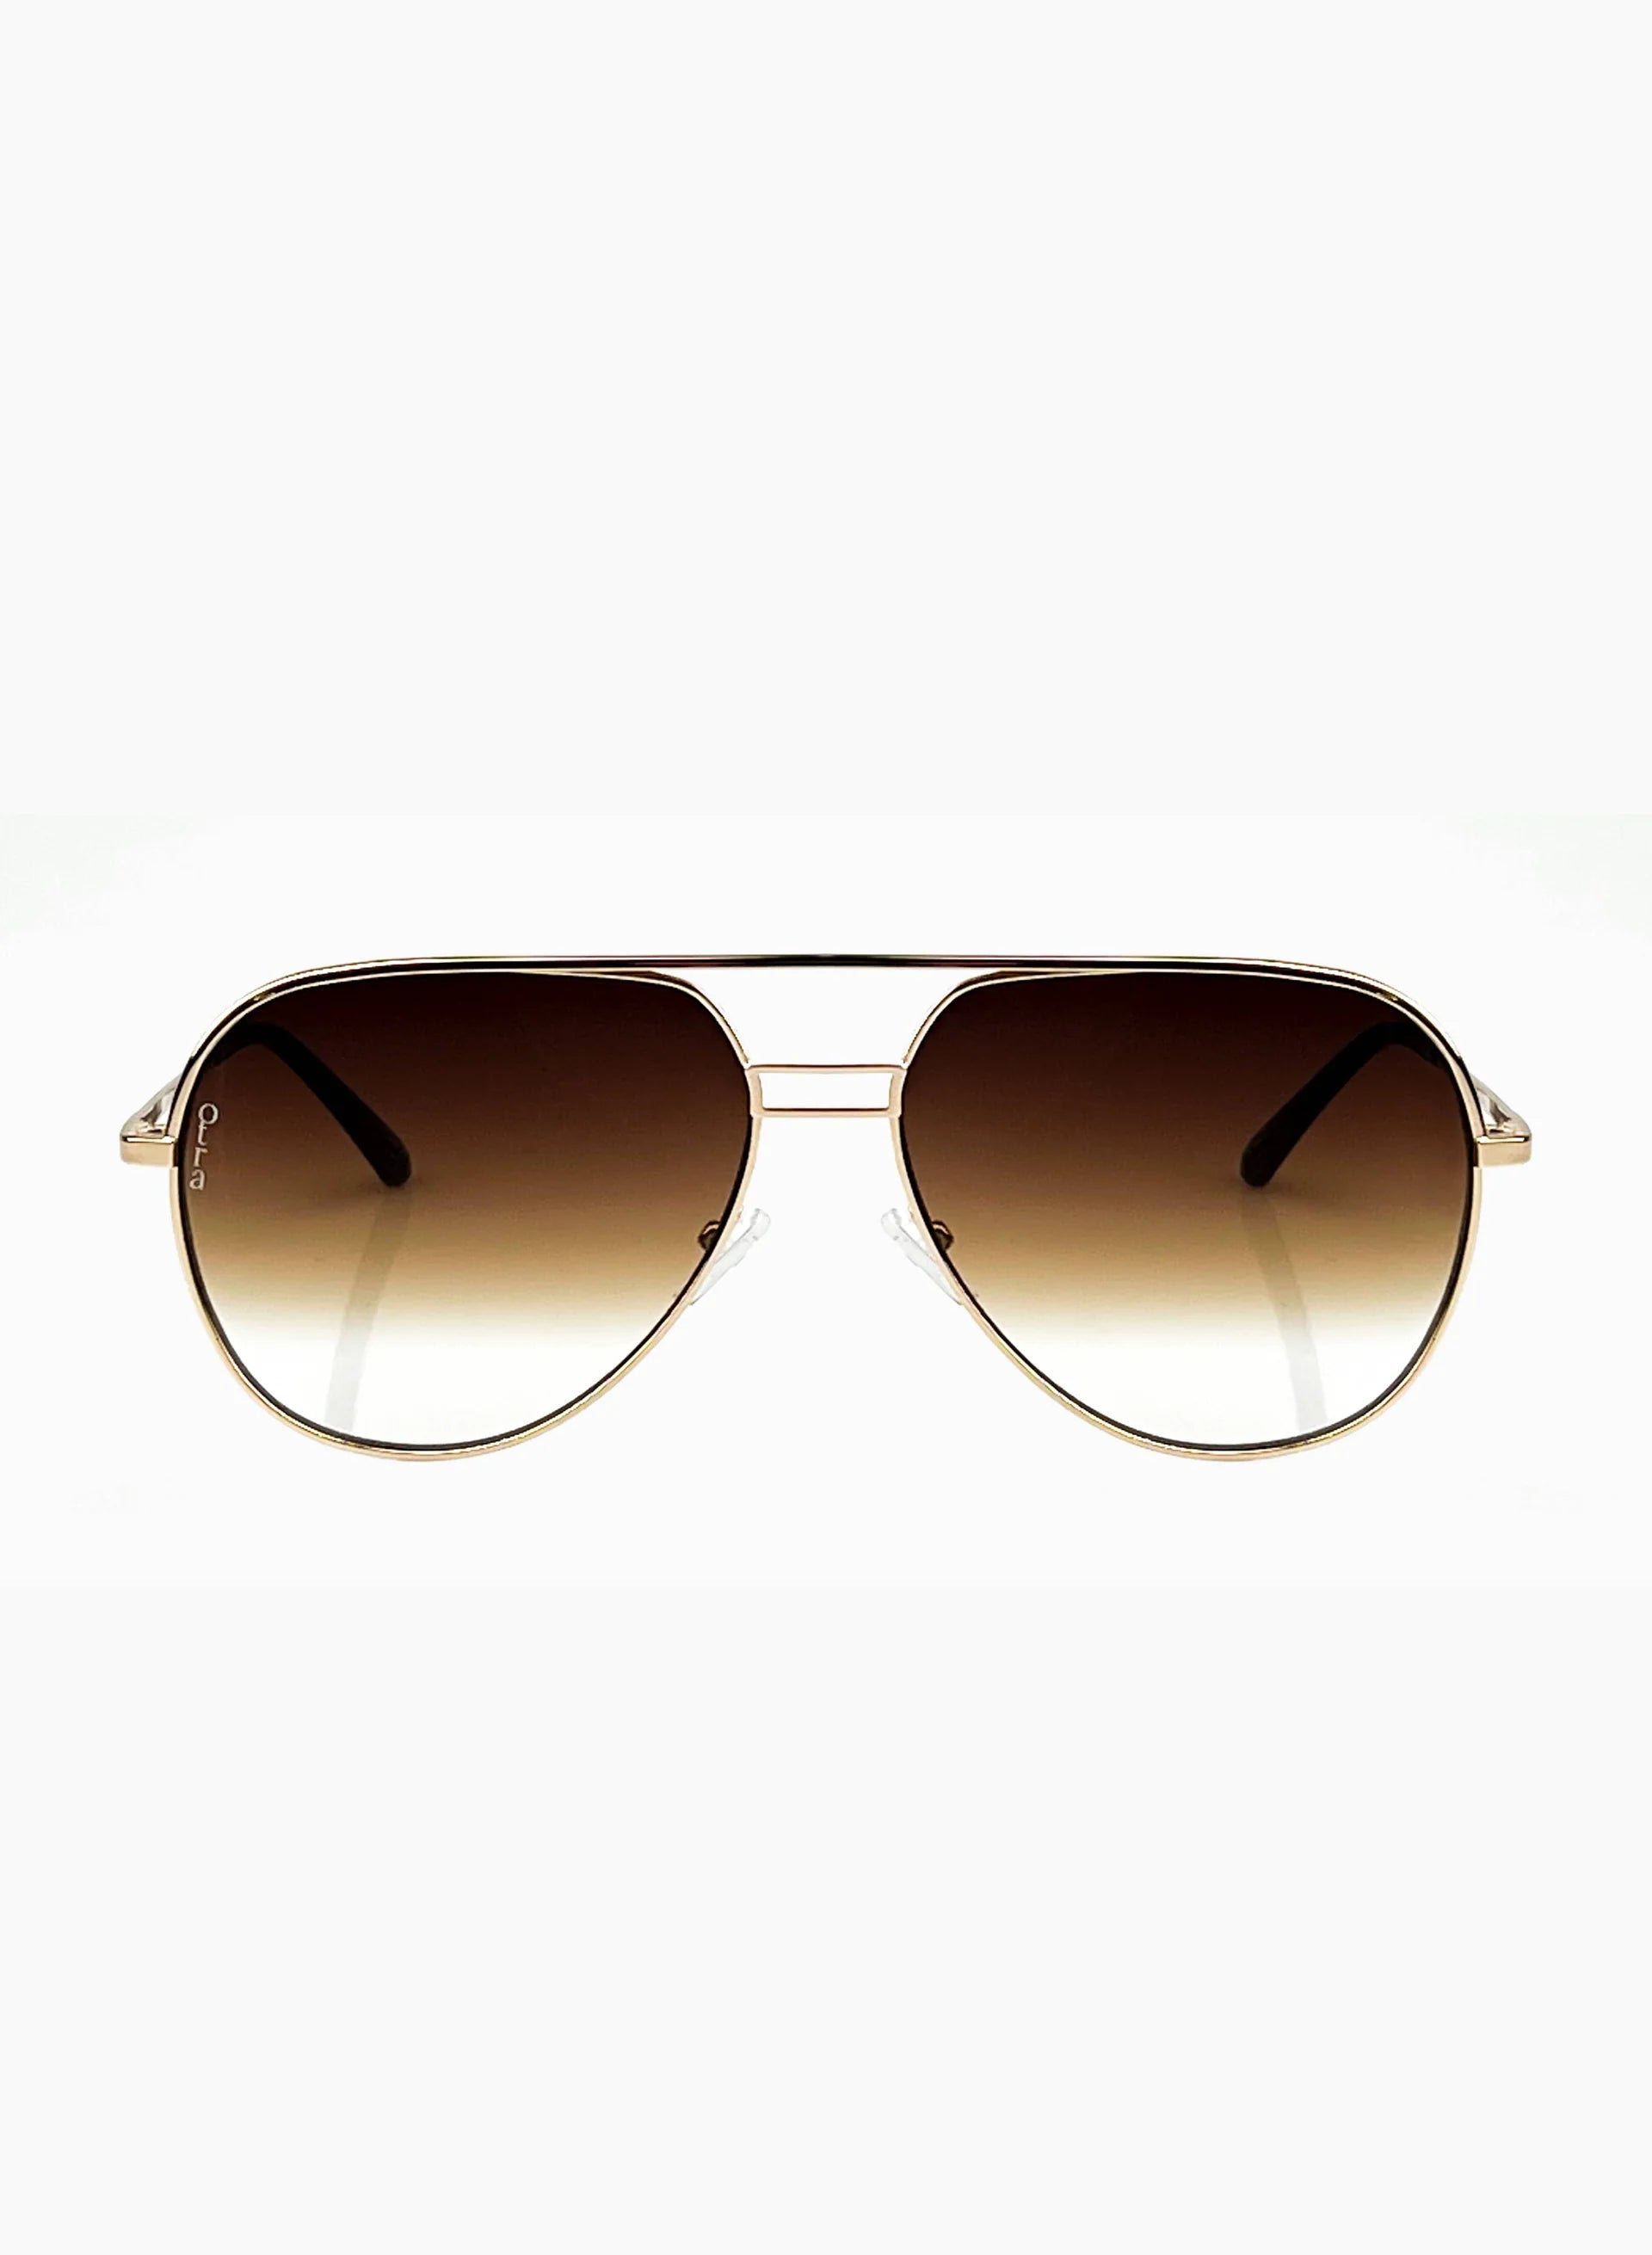 Transit Sunglasses Gold Brown Fade